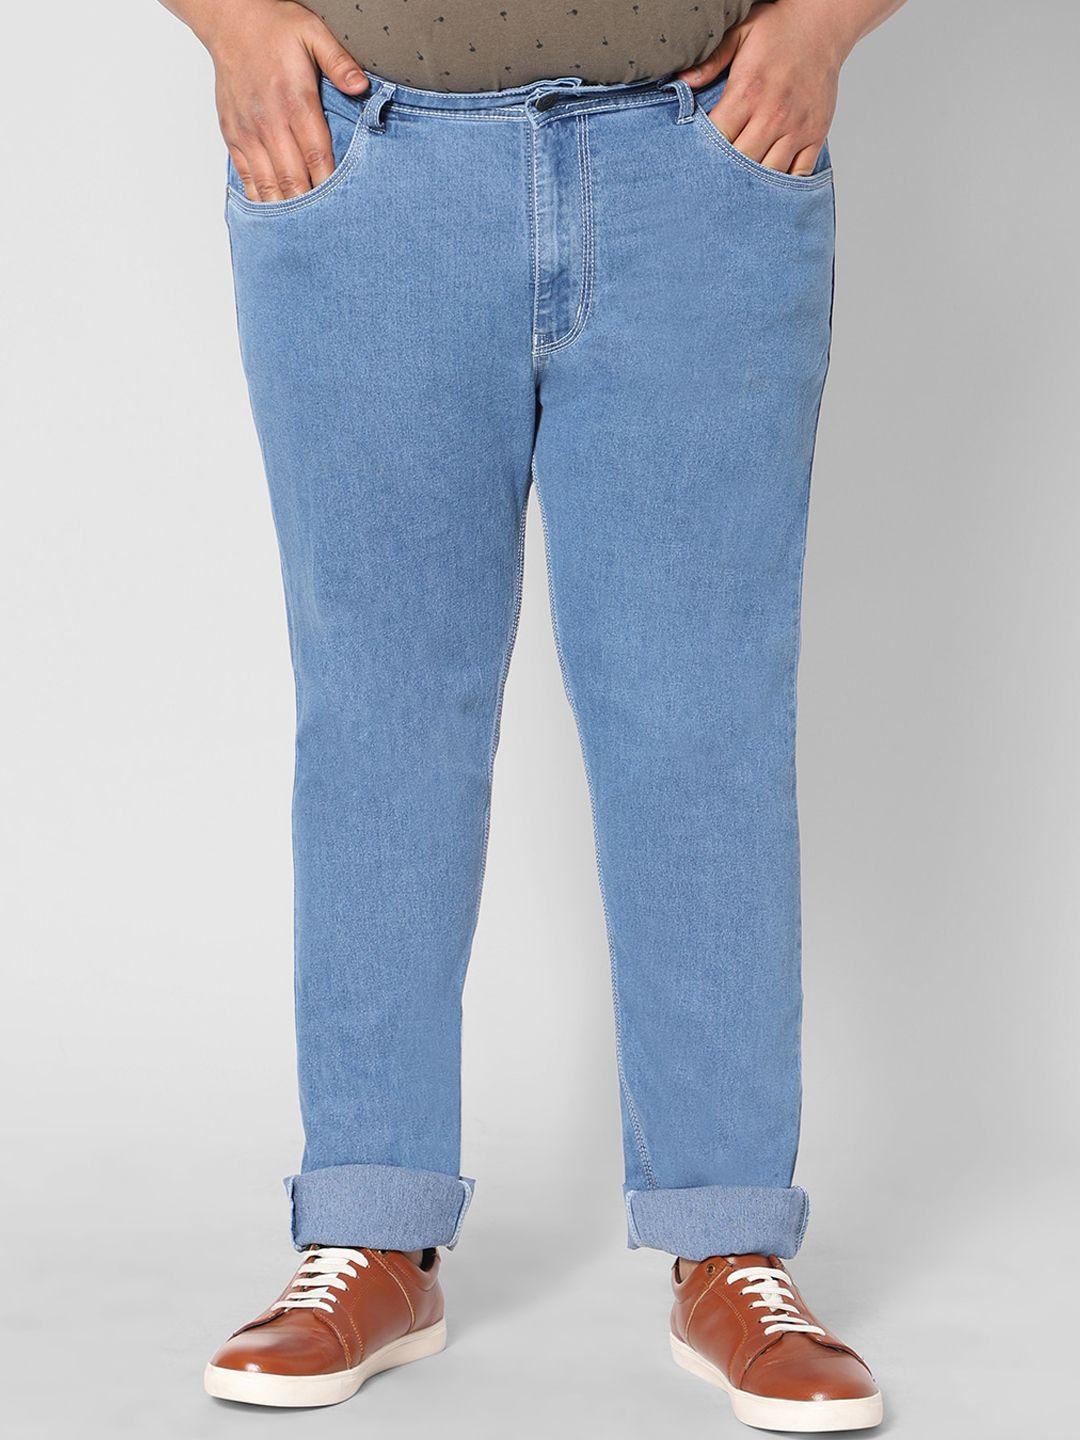 hj-hasasi-men-plus-size-stretchable-cotton-jeans